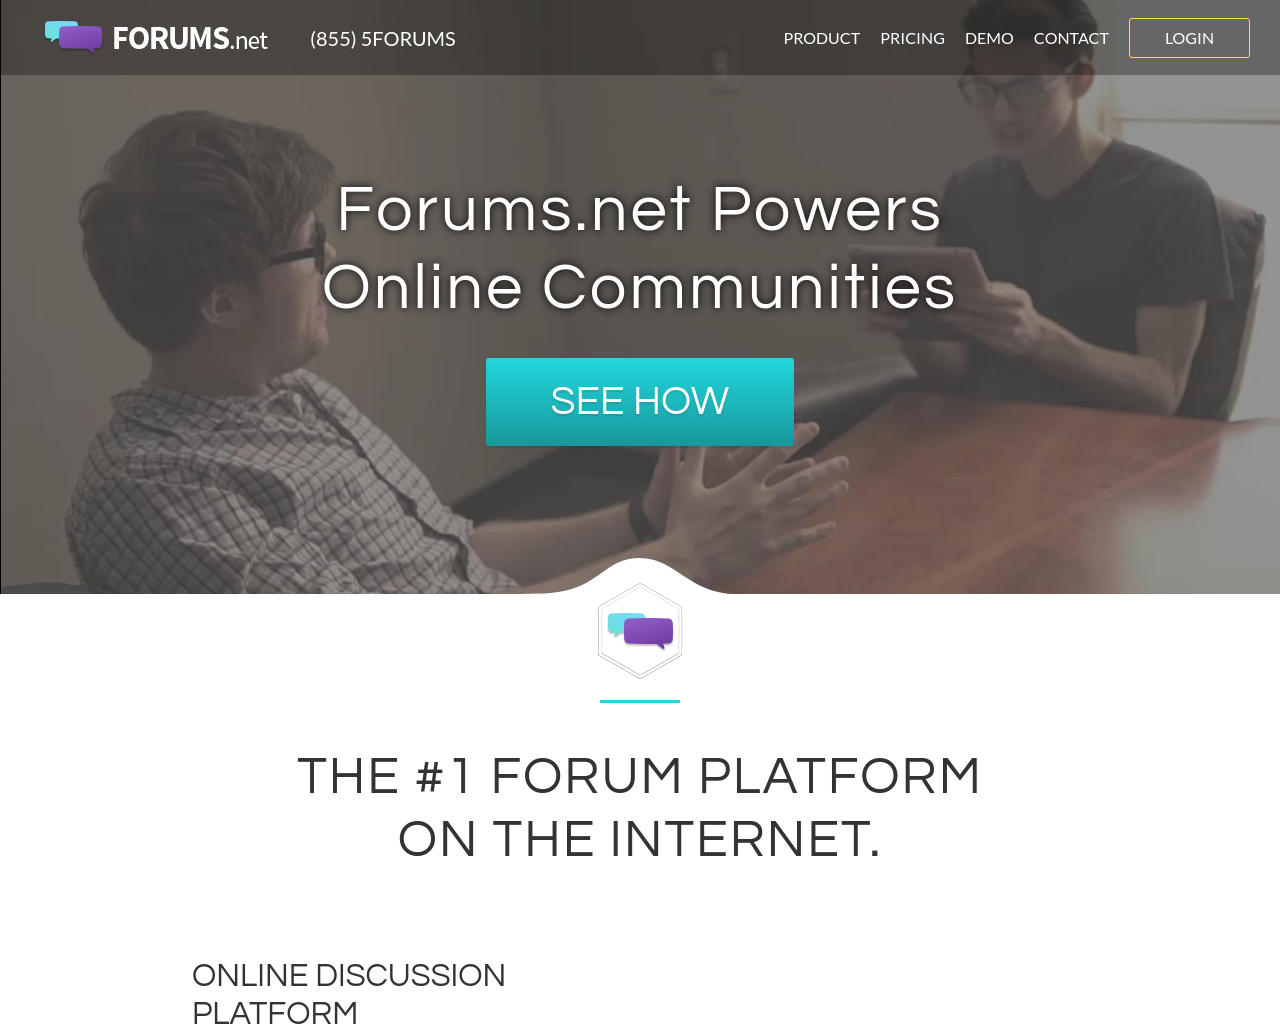 forums.net